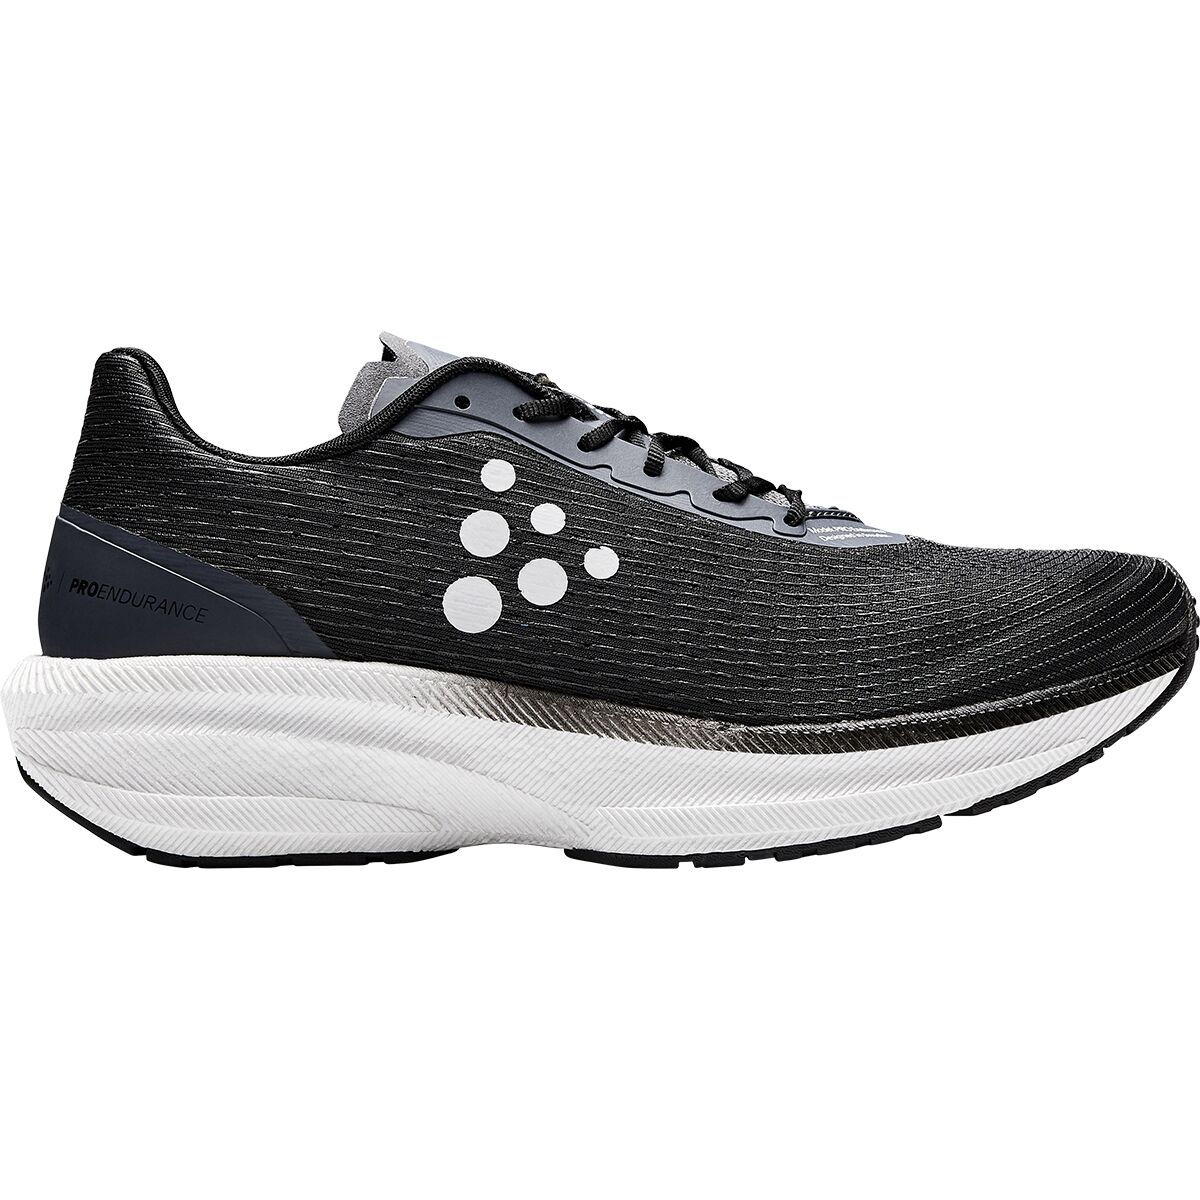 Craft Pro Endur Distance Running Shoe - Men's Black/White, 13.0